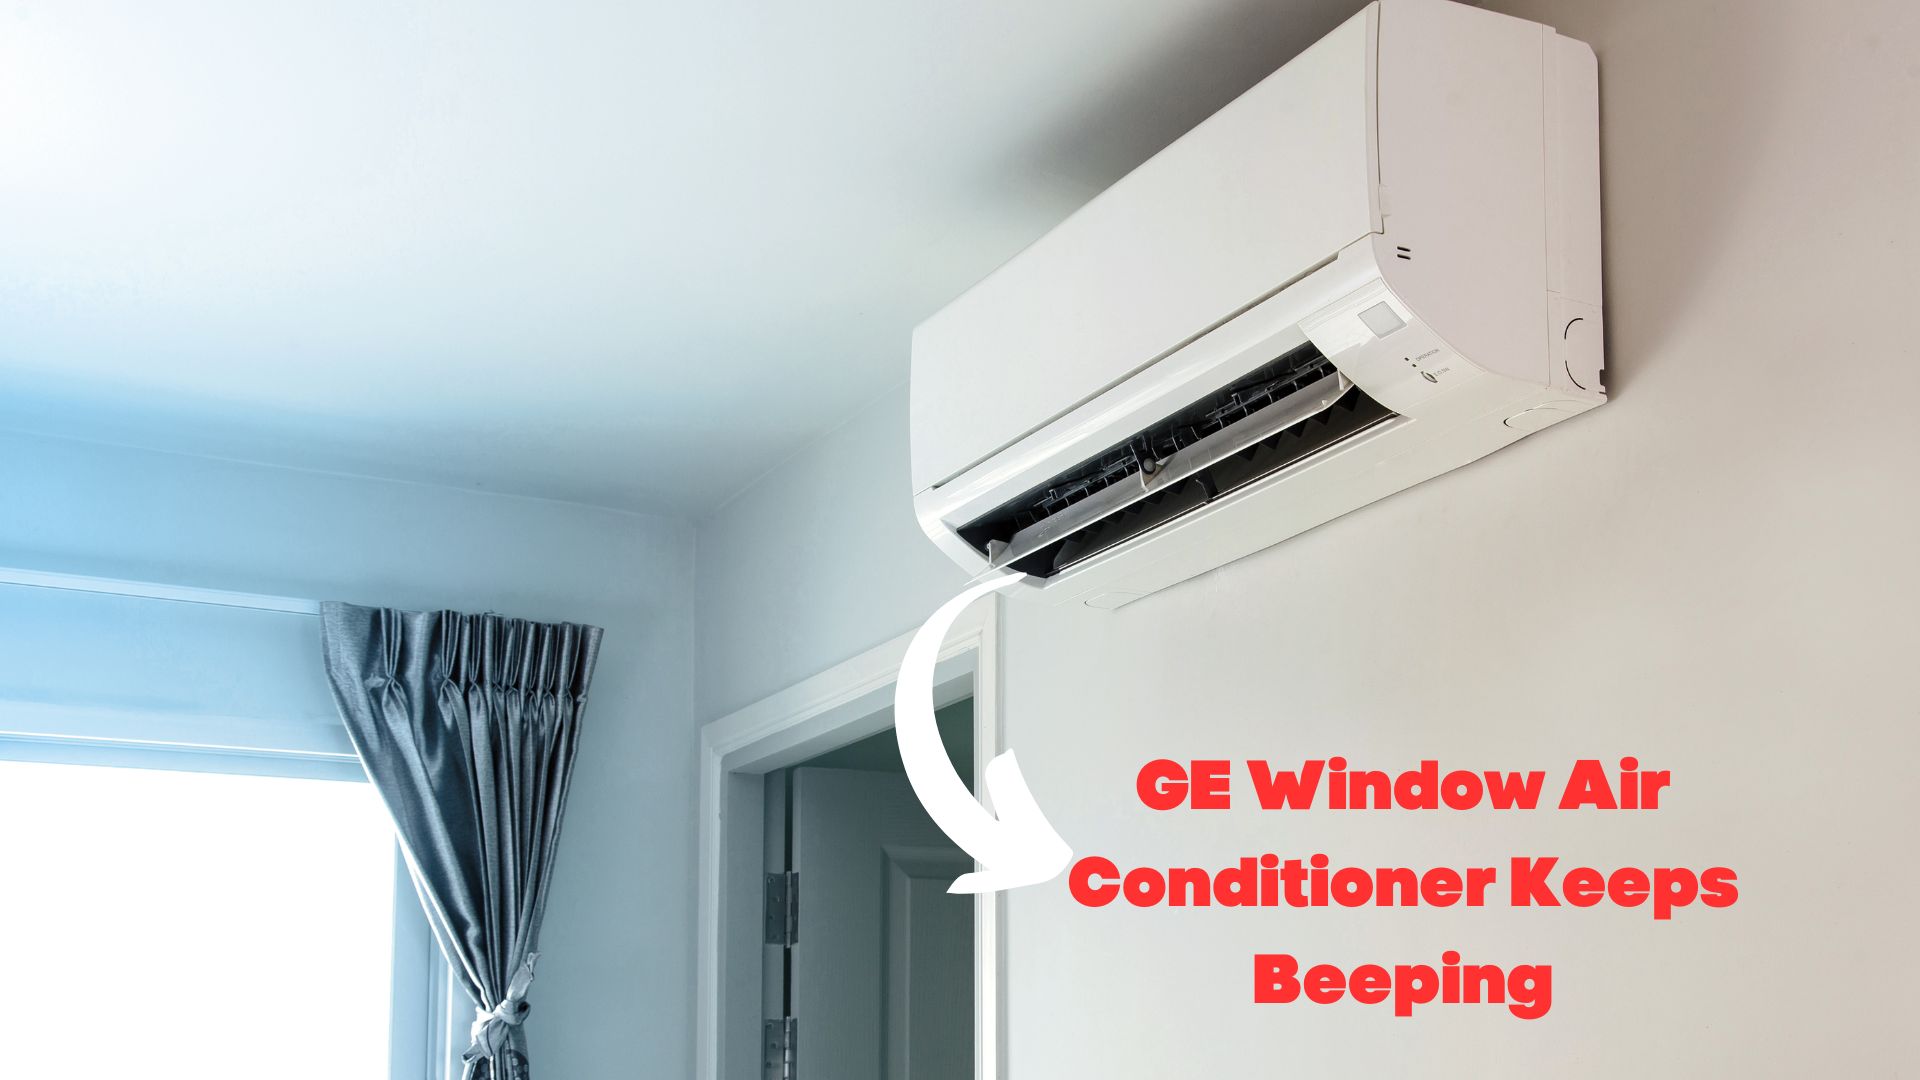 GE Window Air Conditioner Keeps Beeping